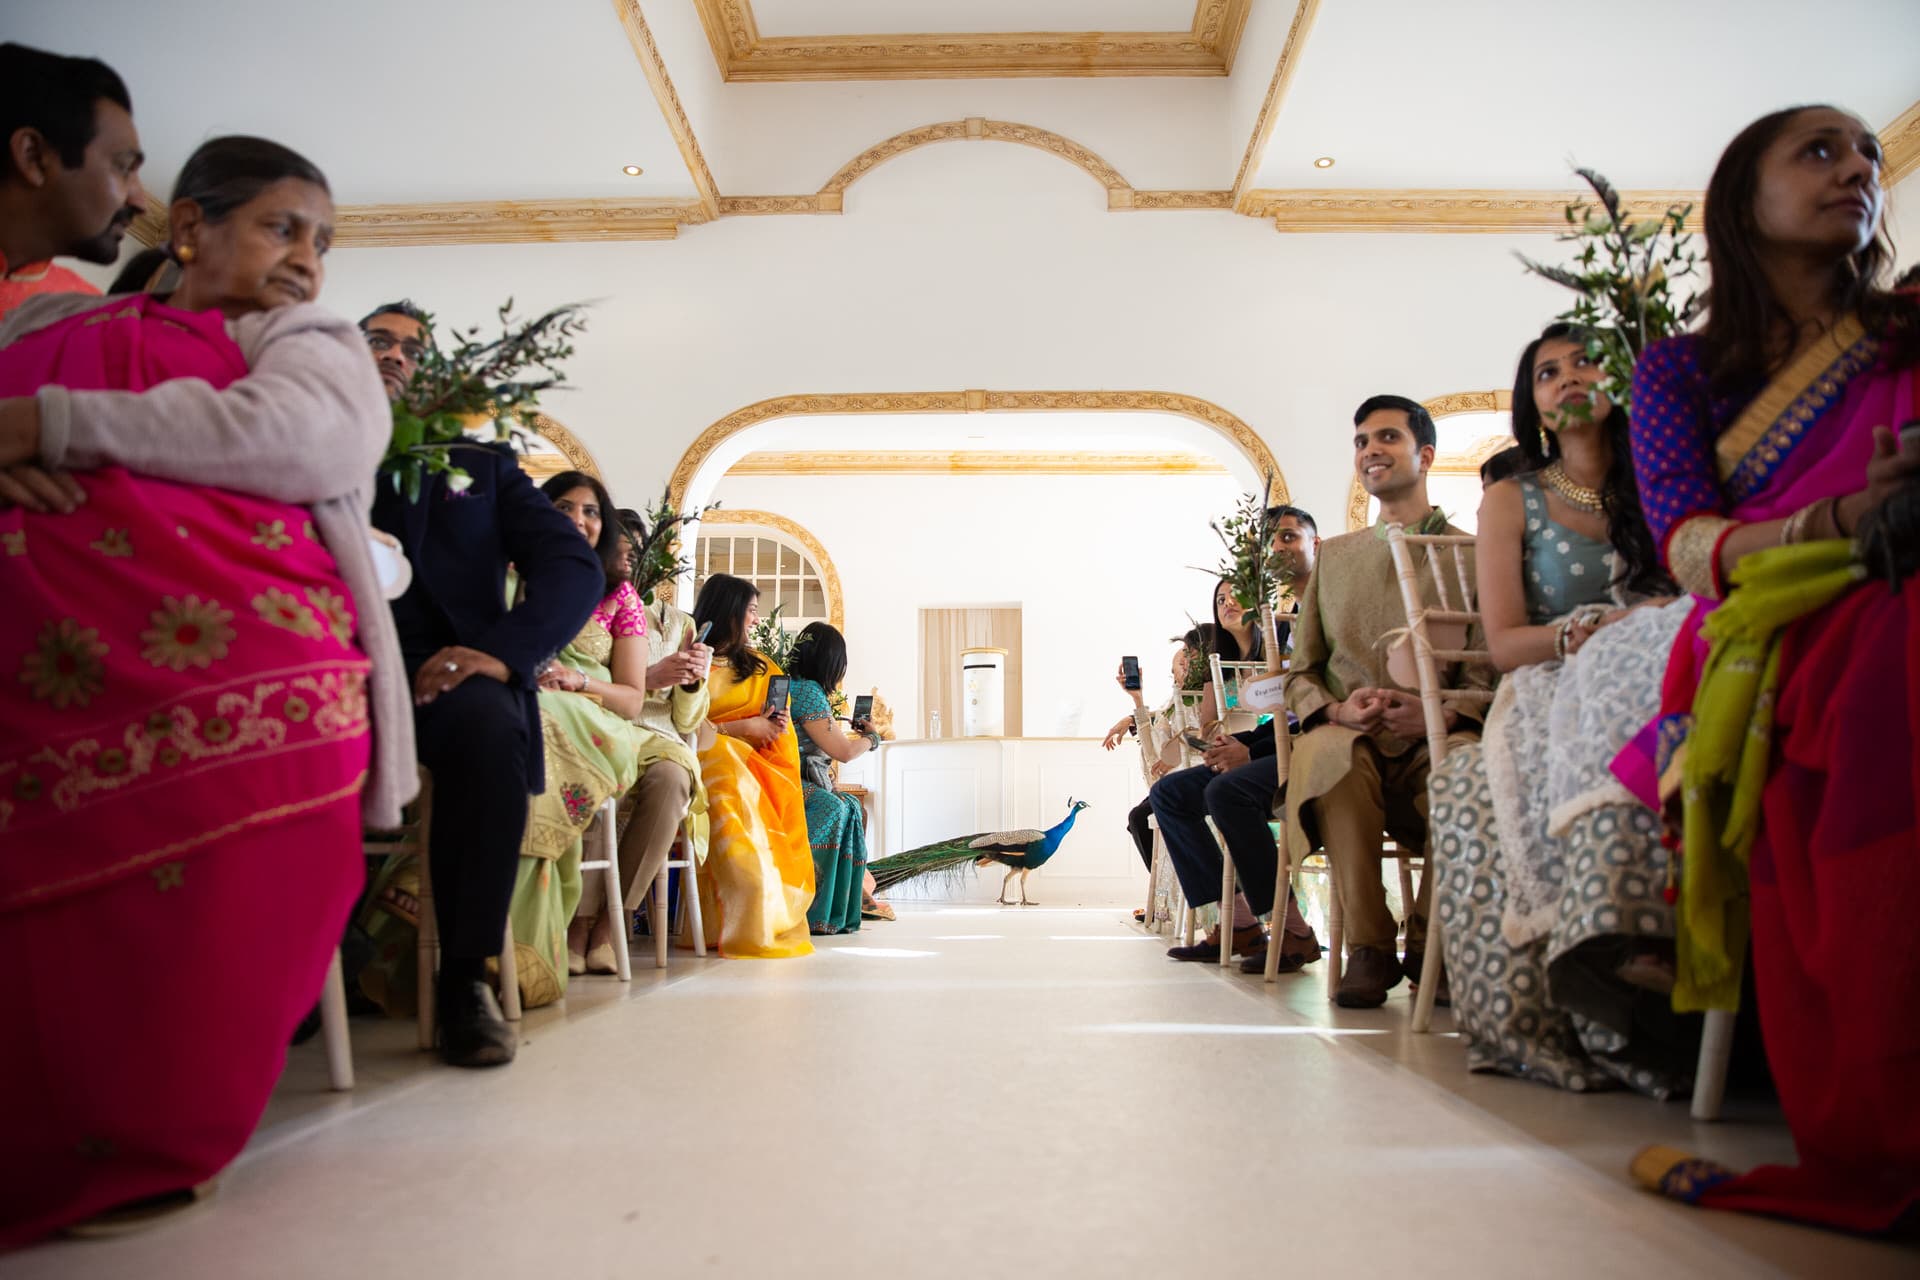 Best Asian wedding photographs of 2020